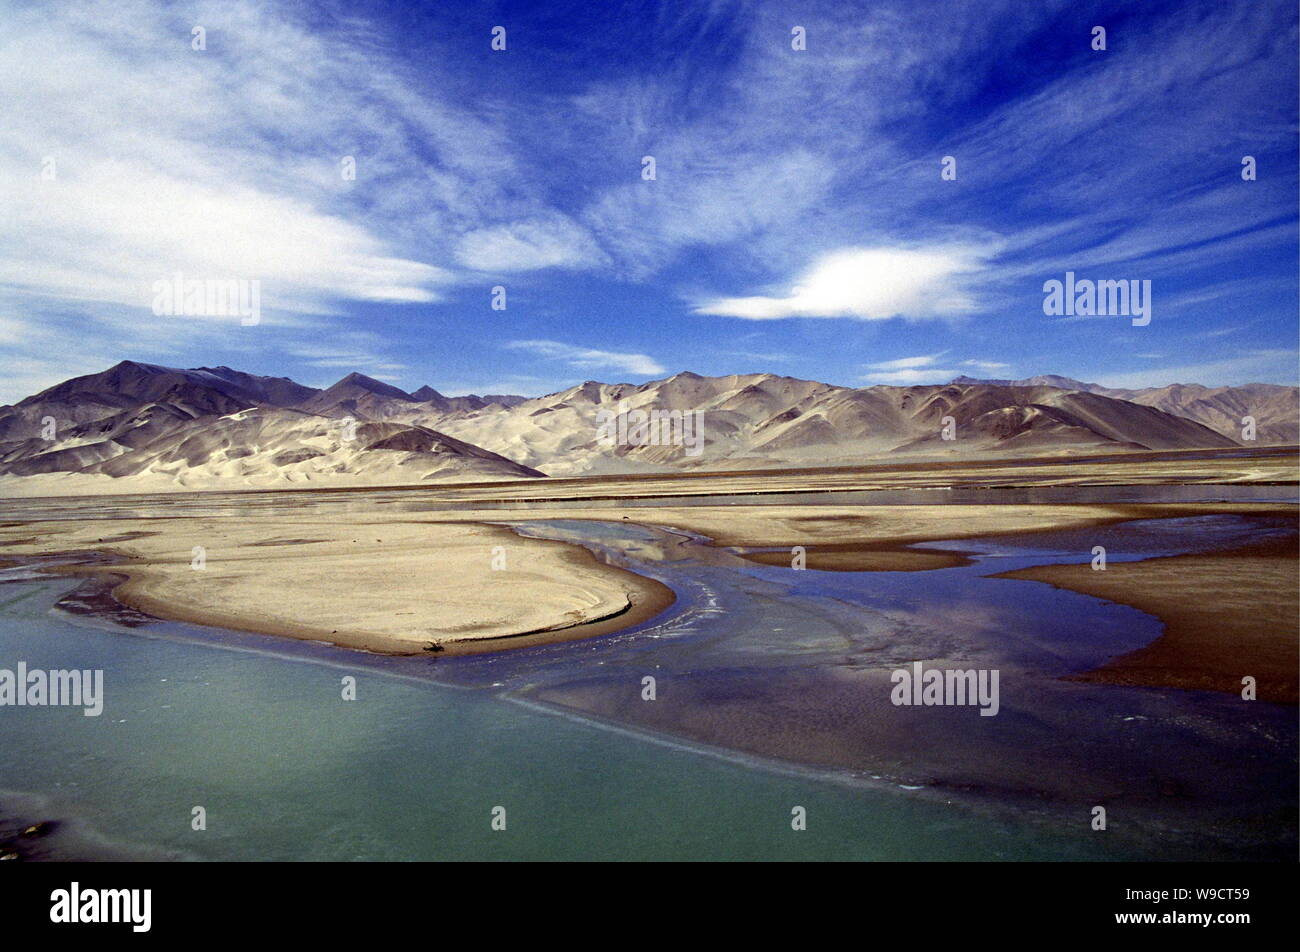 Paesaggio di plateau in Tashkurgan tagiko contea autonoma nel nord-ovest Chinas Xinjiang Uygur Regione autonoma, ottobre 2007. Foto Stock